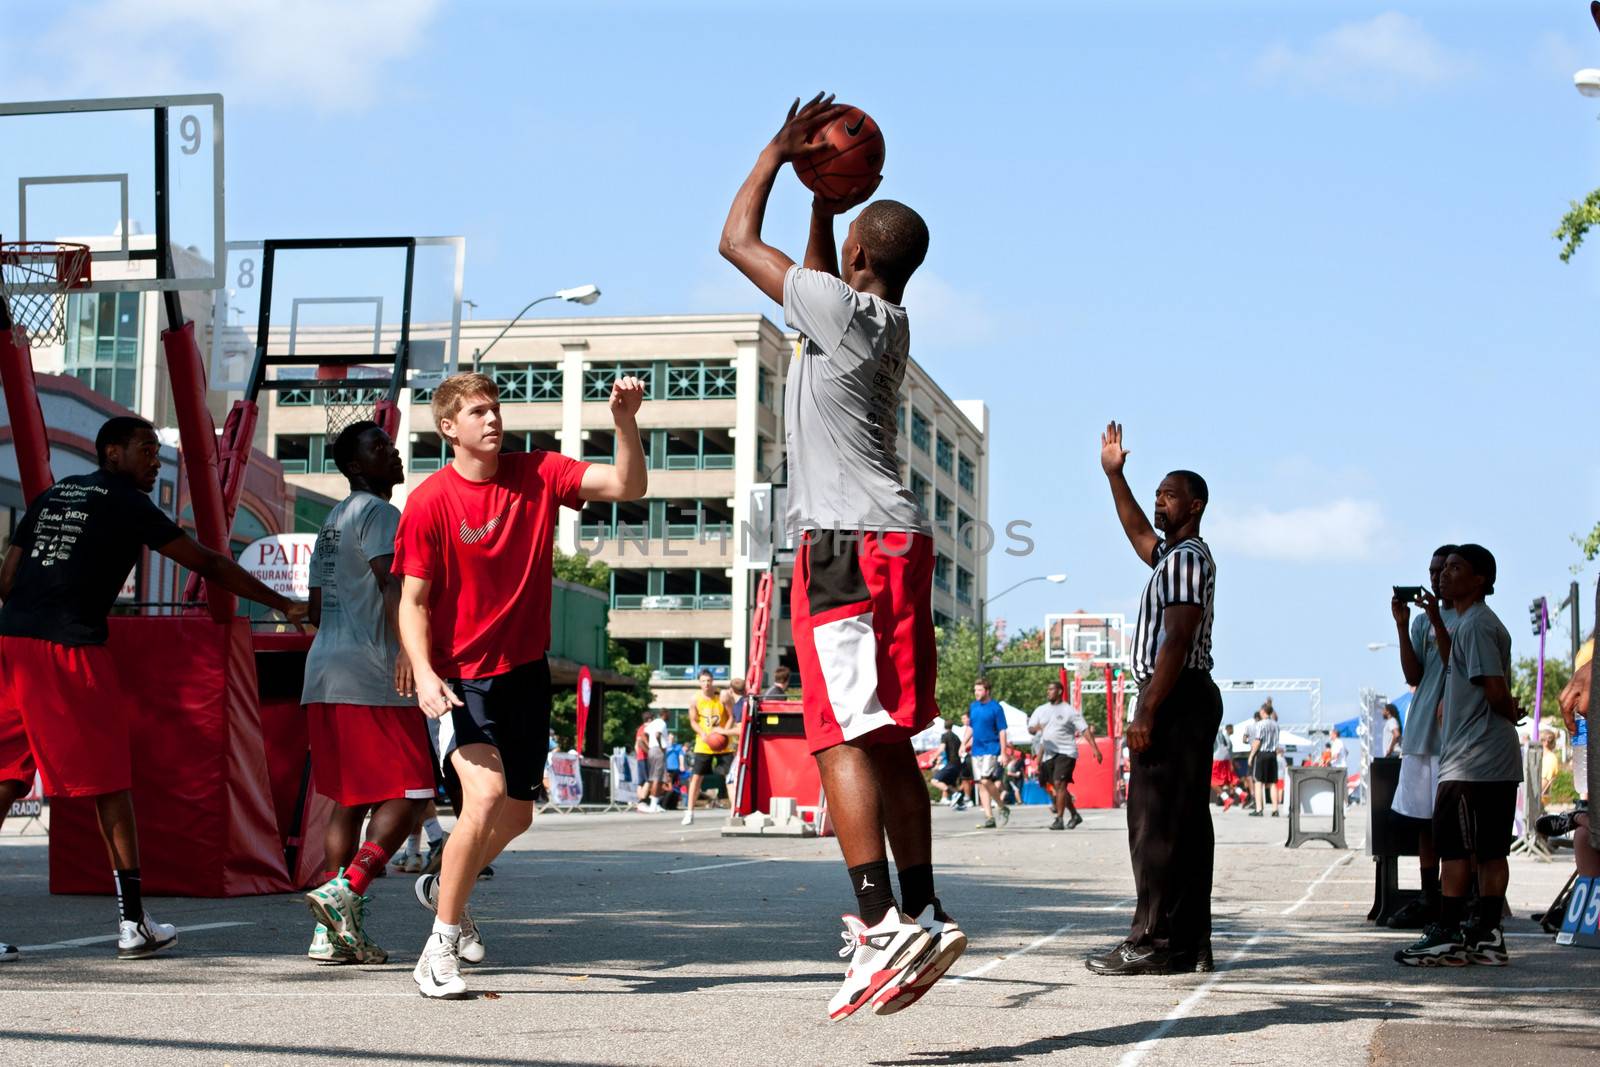 Young Man Shoots Jump Shot In Street Basketball Tournament by BluIz60